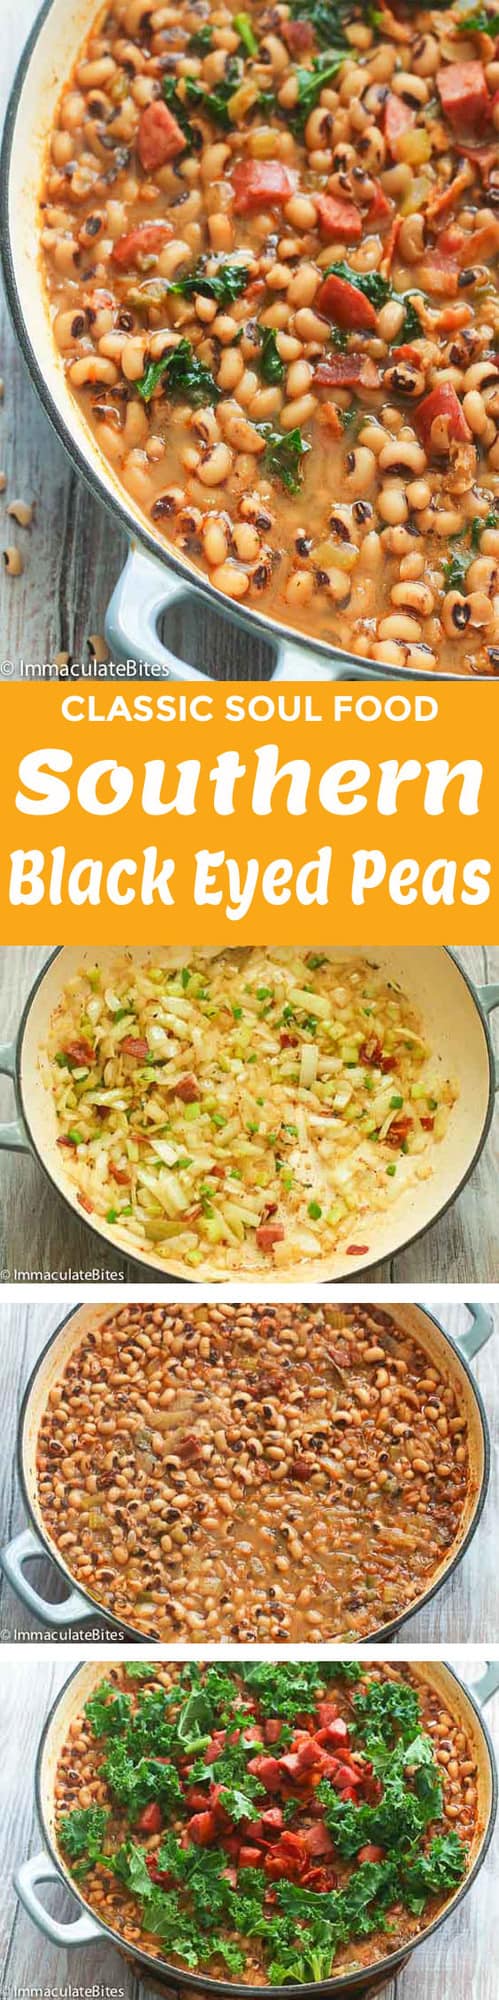 Southern Black Eyed Peas Recipe